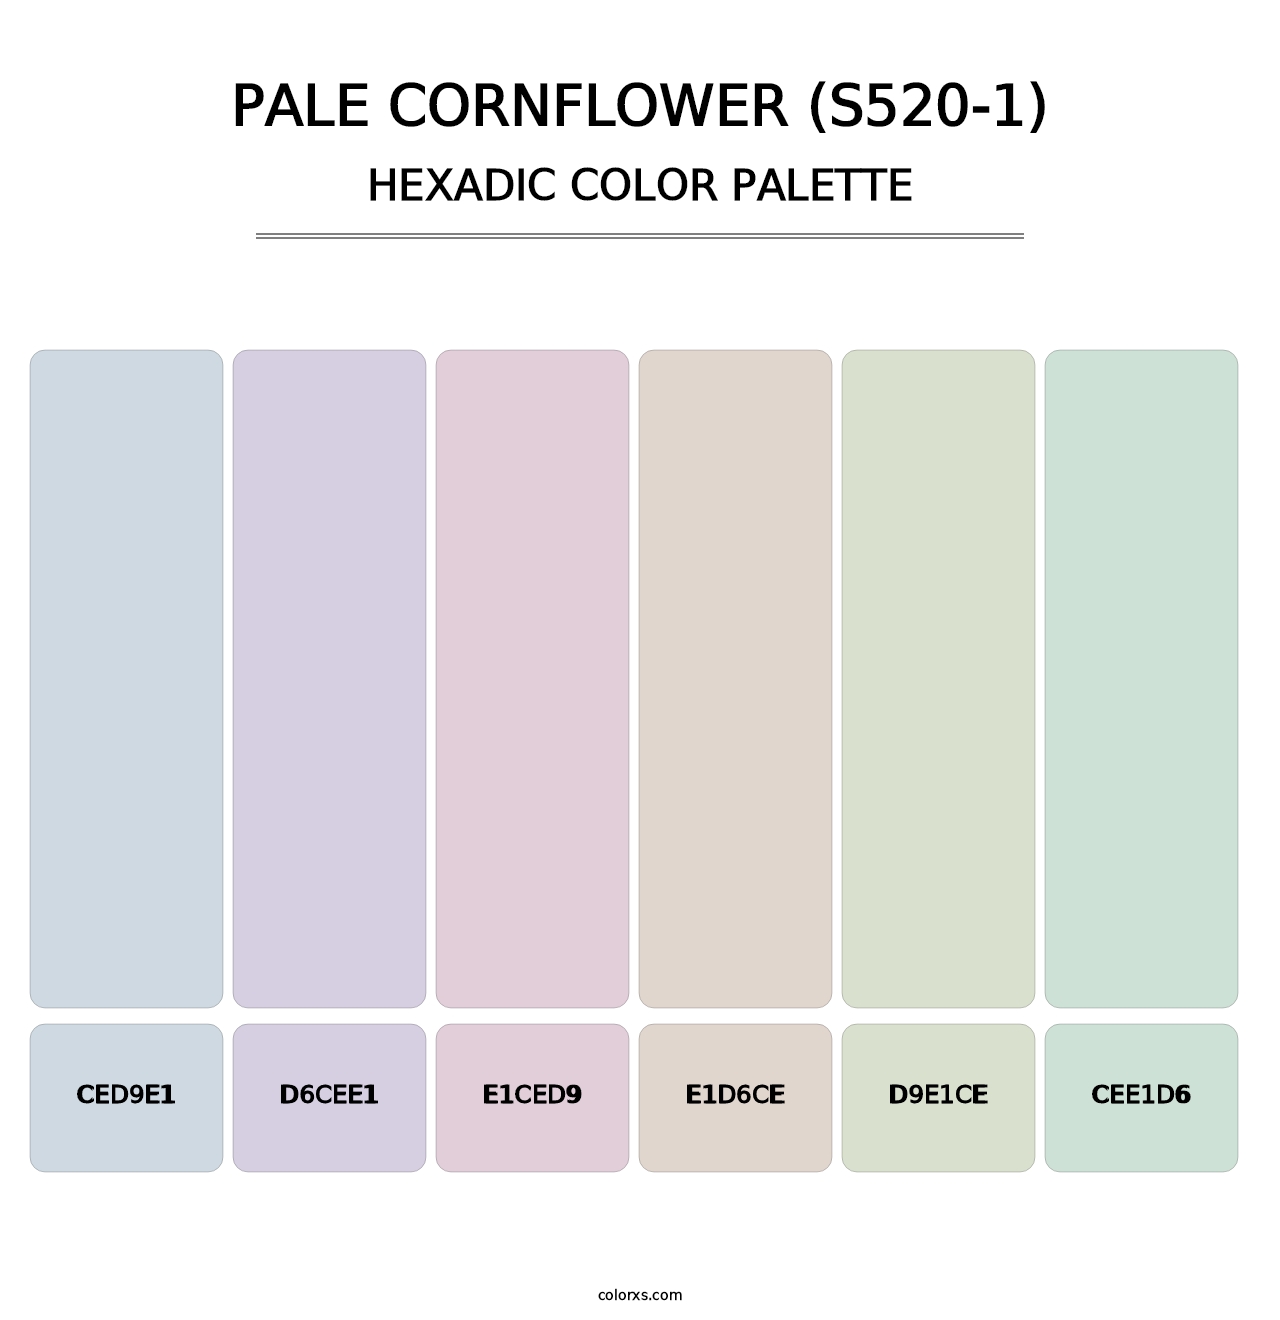 Pale Cornflower (S520-1) - Hexadic Color Palette